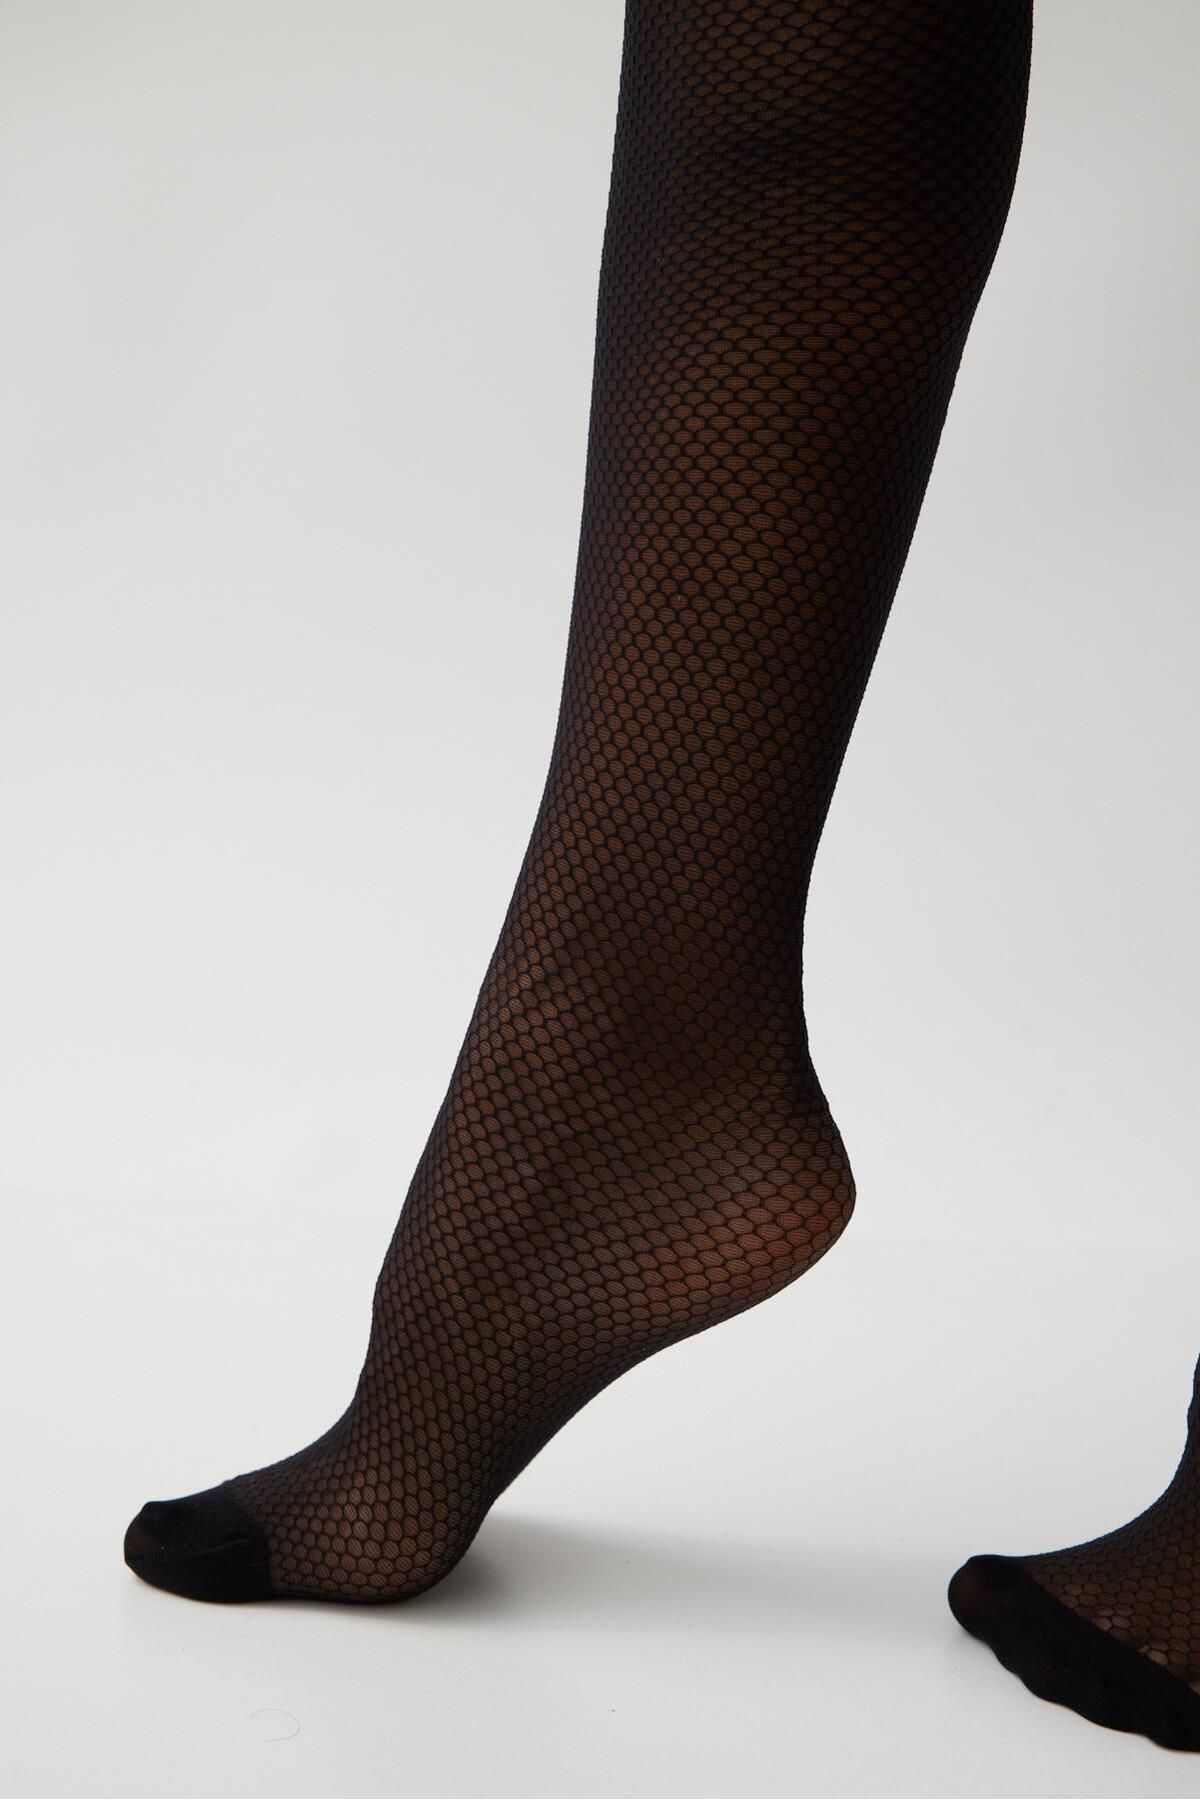 Gambetti - No Seam Kadın Dikişsiz Külotlu Çorap - 30 Den - 75210 Siyah